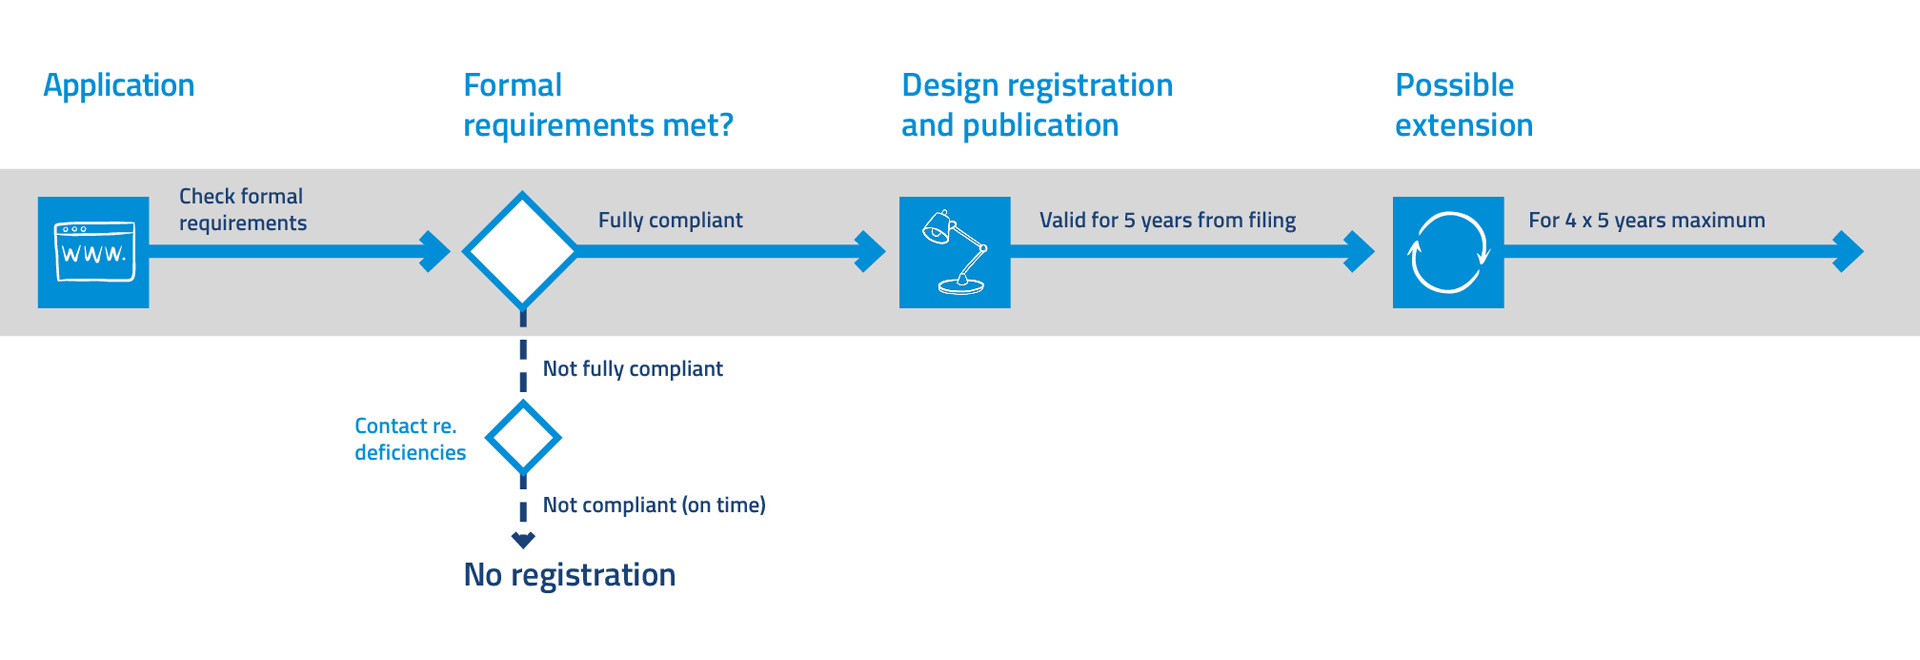 Procedure model registration schematically depicted